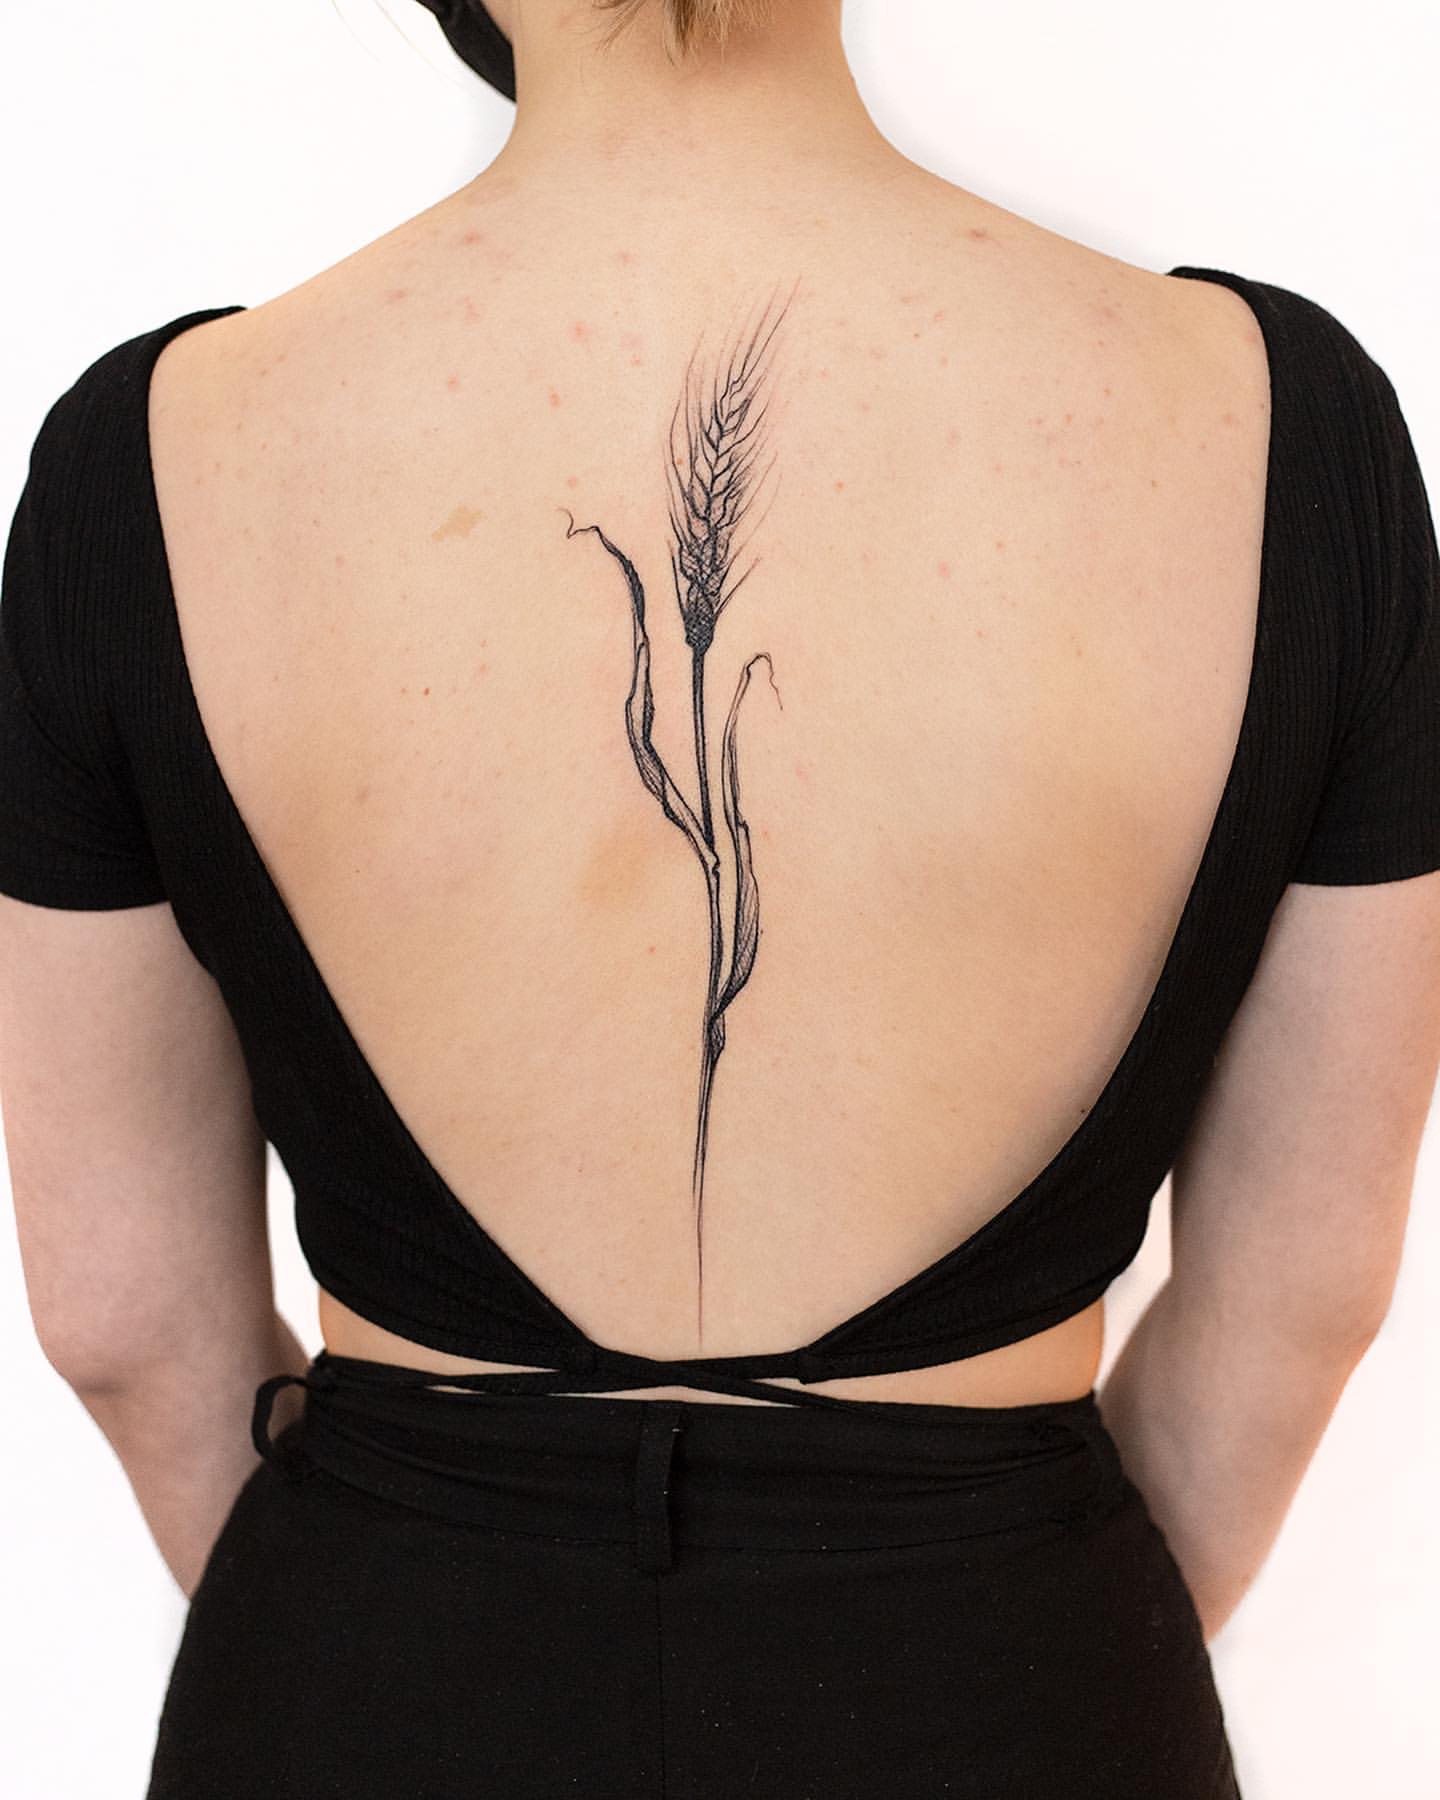 Spine Tattoos for Women 31